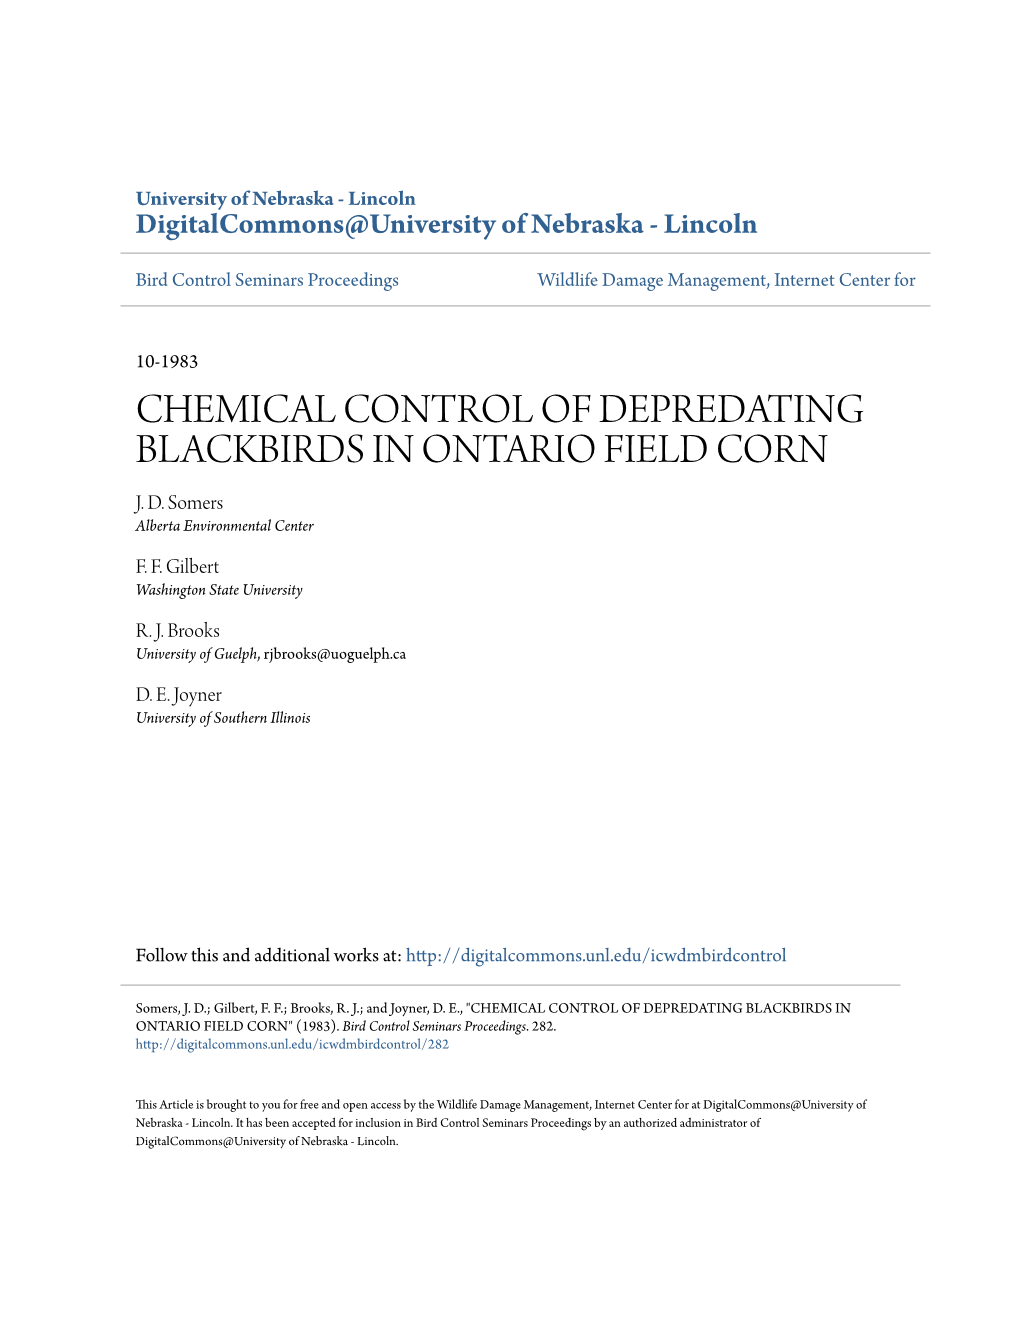 Chemical Control of Depredating Blackbirds in Ontario Field Corn J